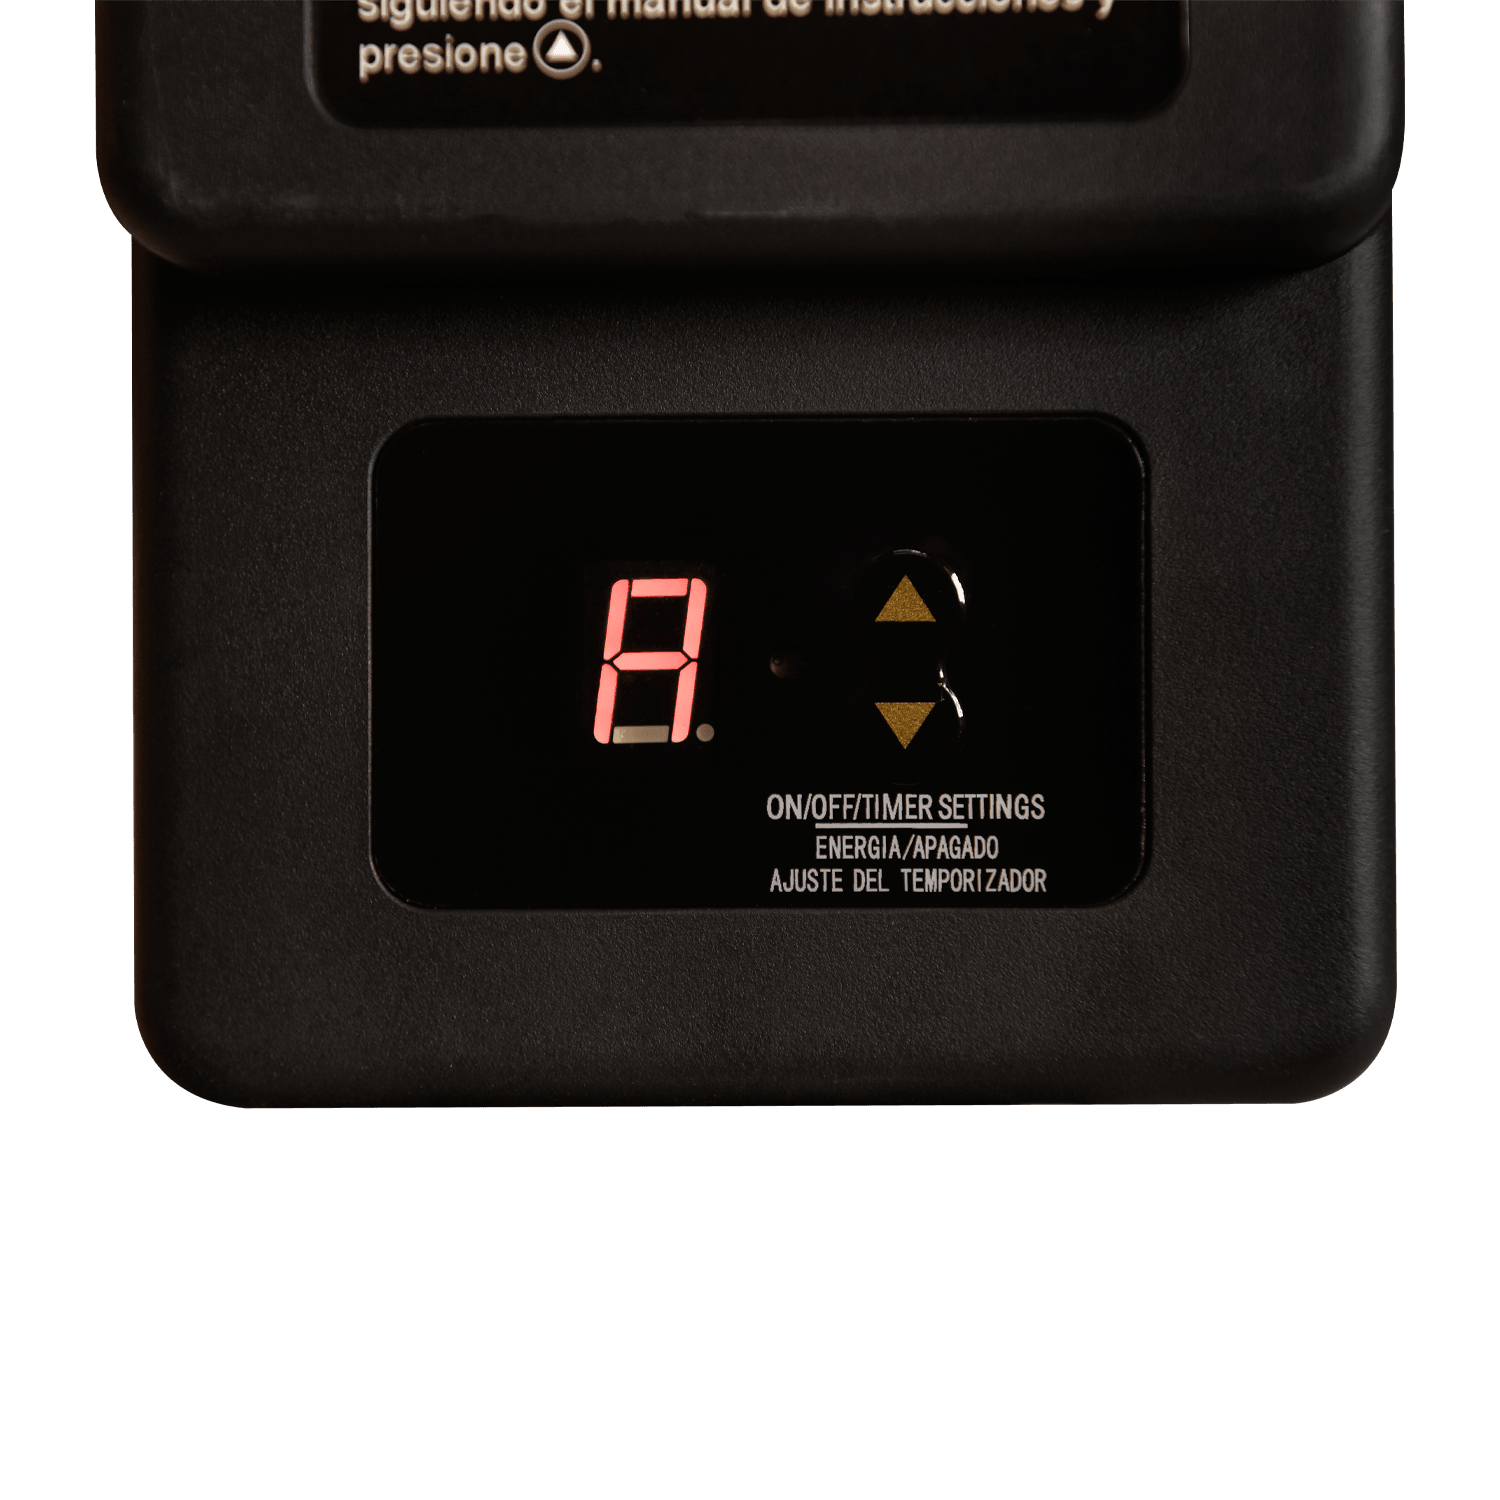 TSP300 300 Watt Low Voltage Transformer with Digital Timer